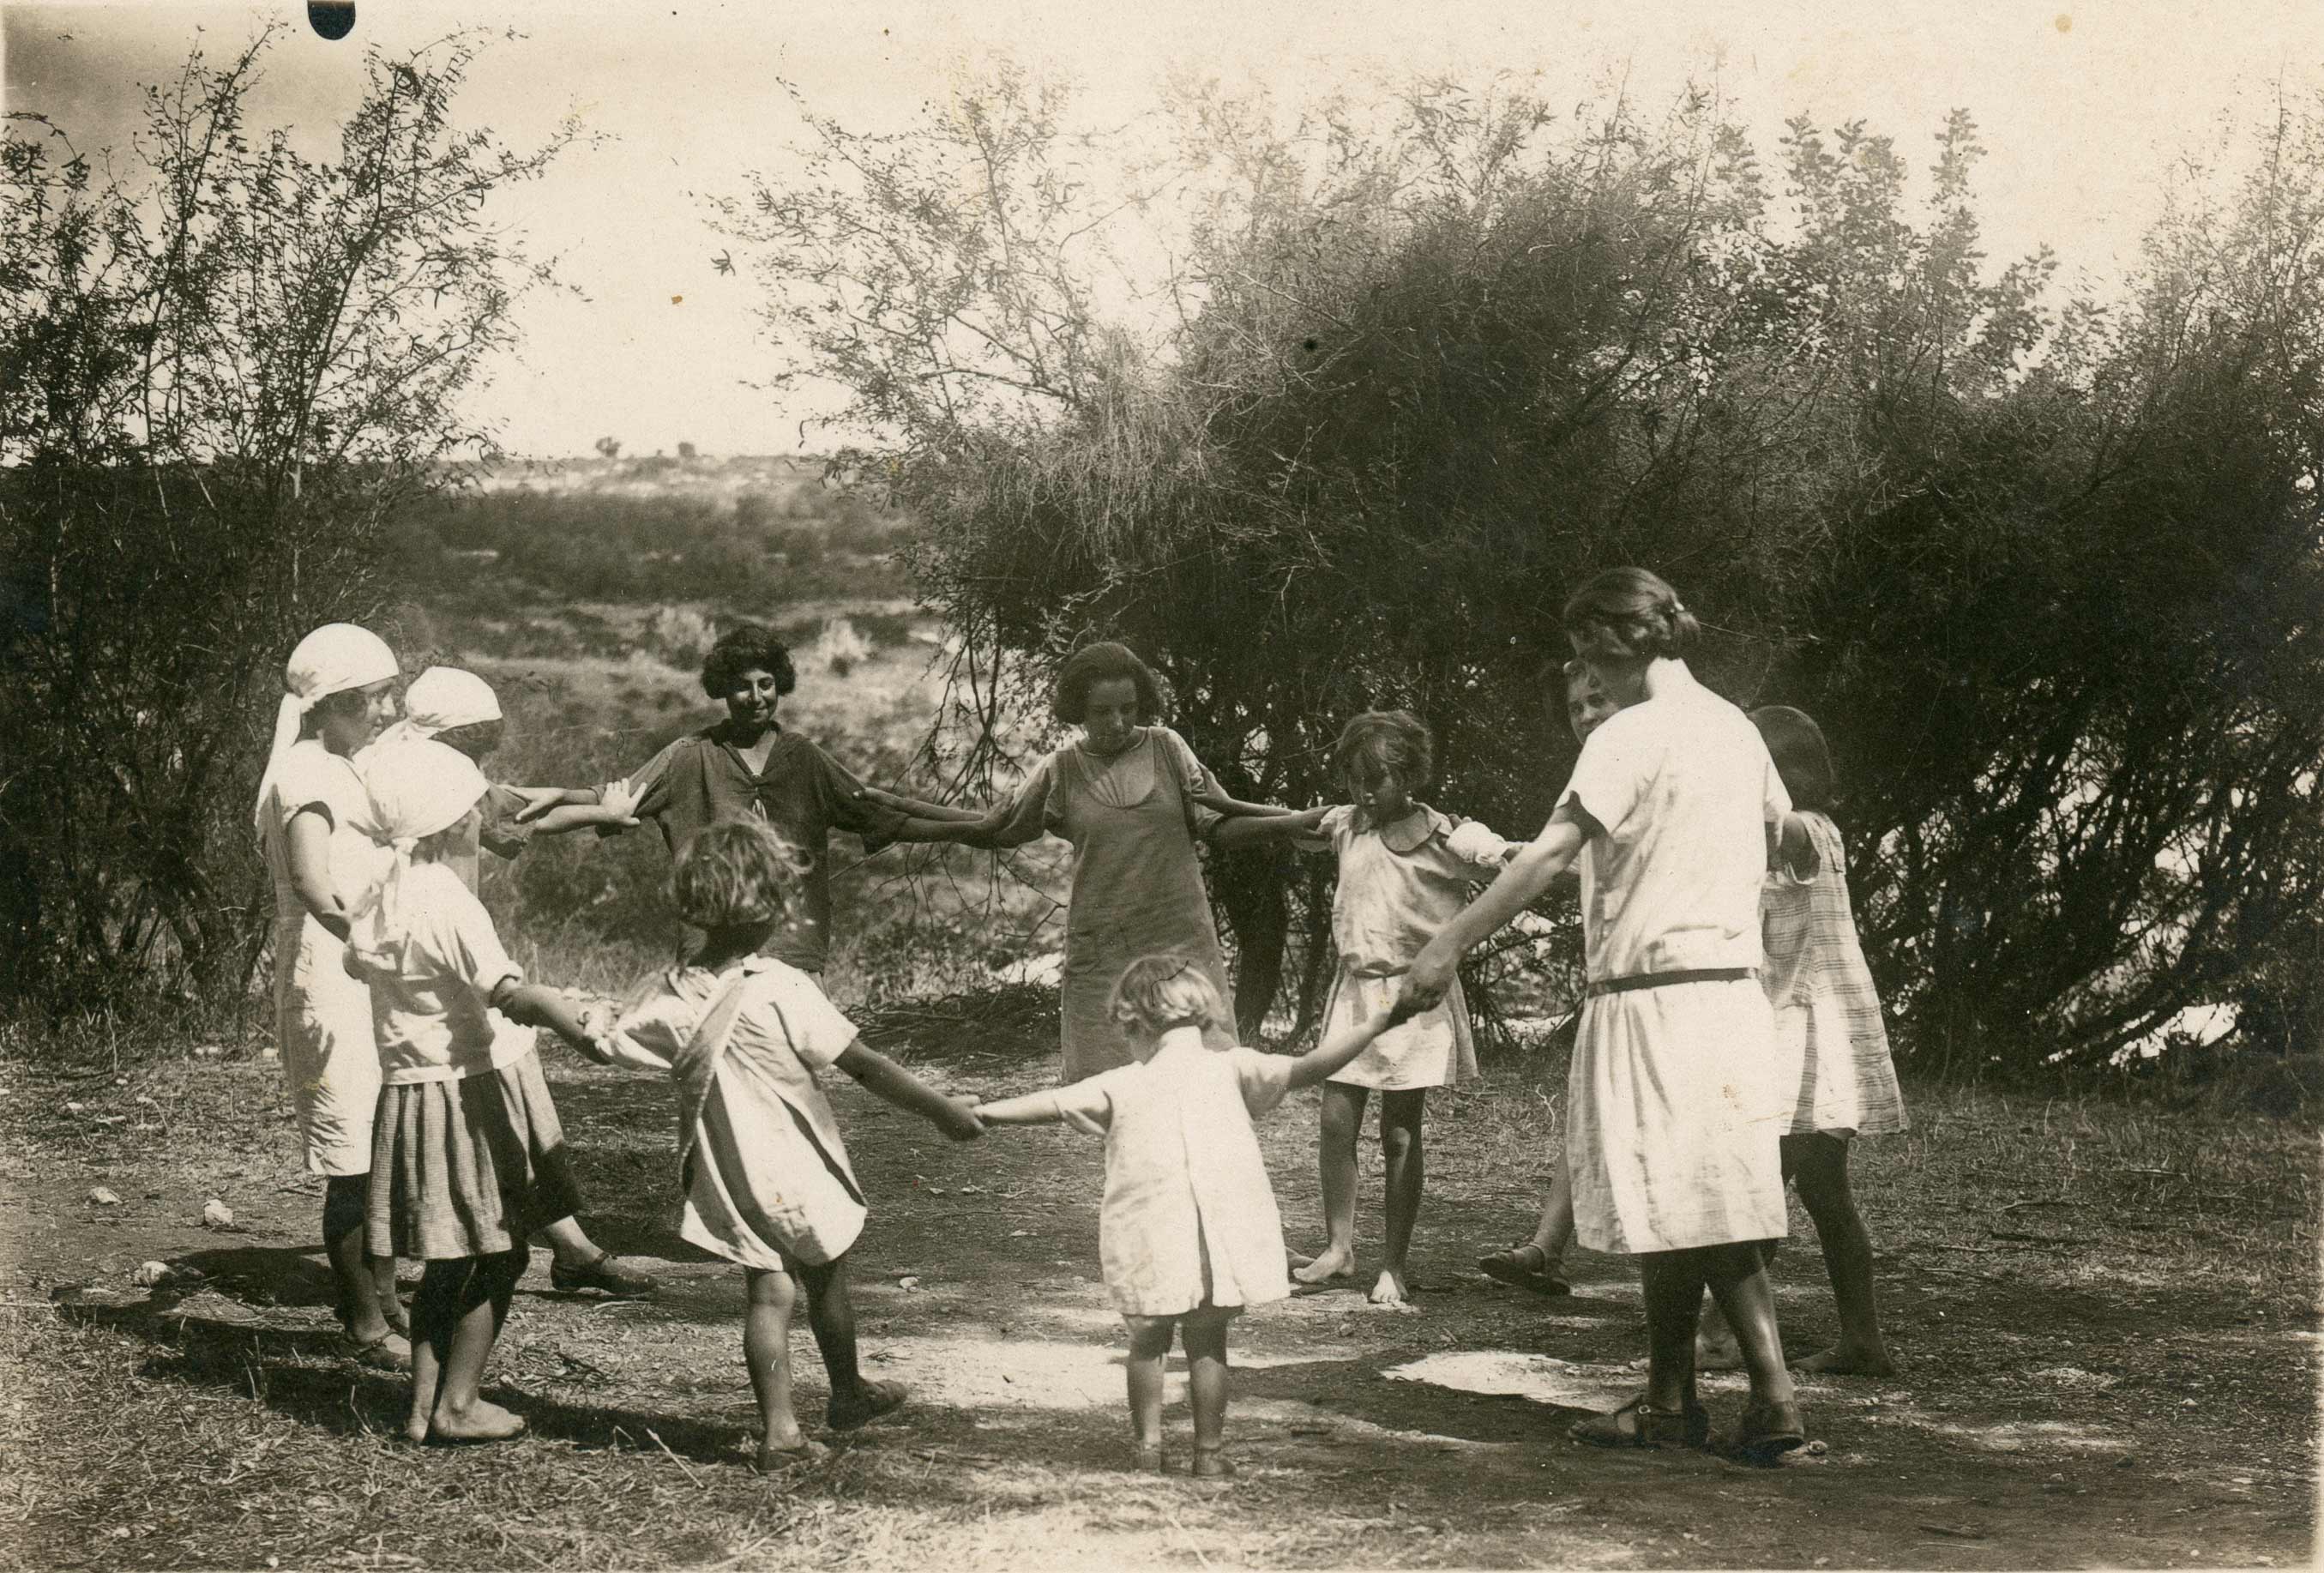 Meir Shfeya ifjúsági falu, ahol Sara Fruman tanult, Izrael, Shfeya, 1925 (forrás: Dokuforte / Gidi Reshef)